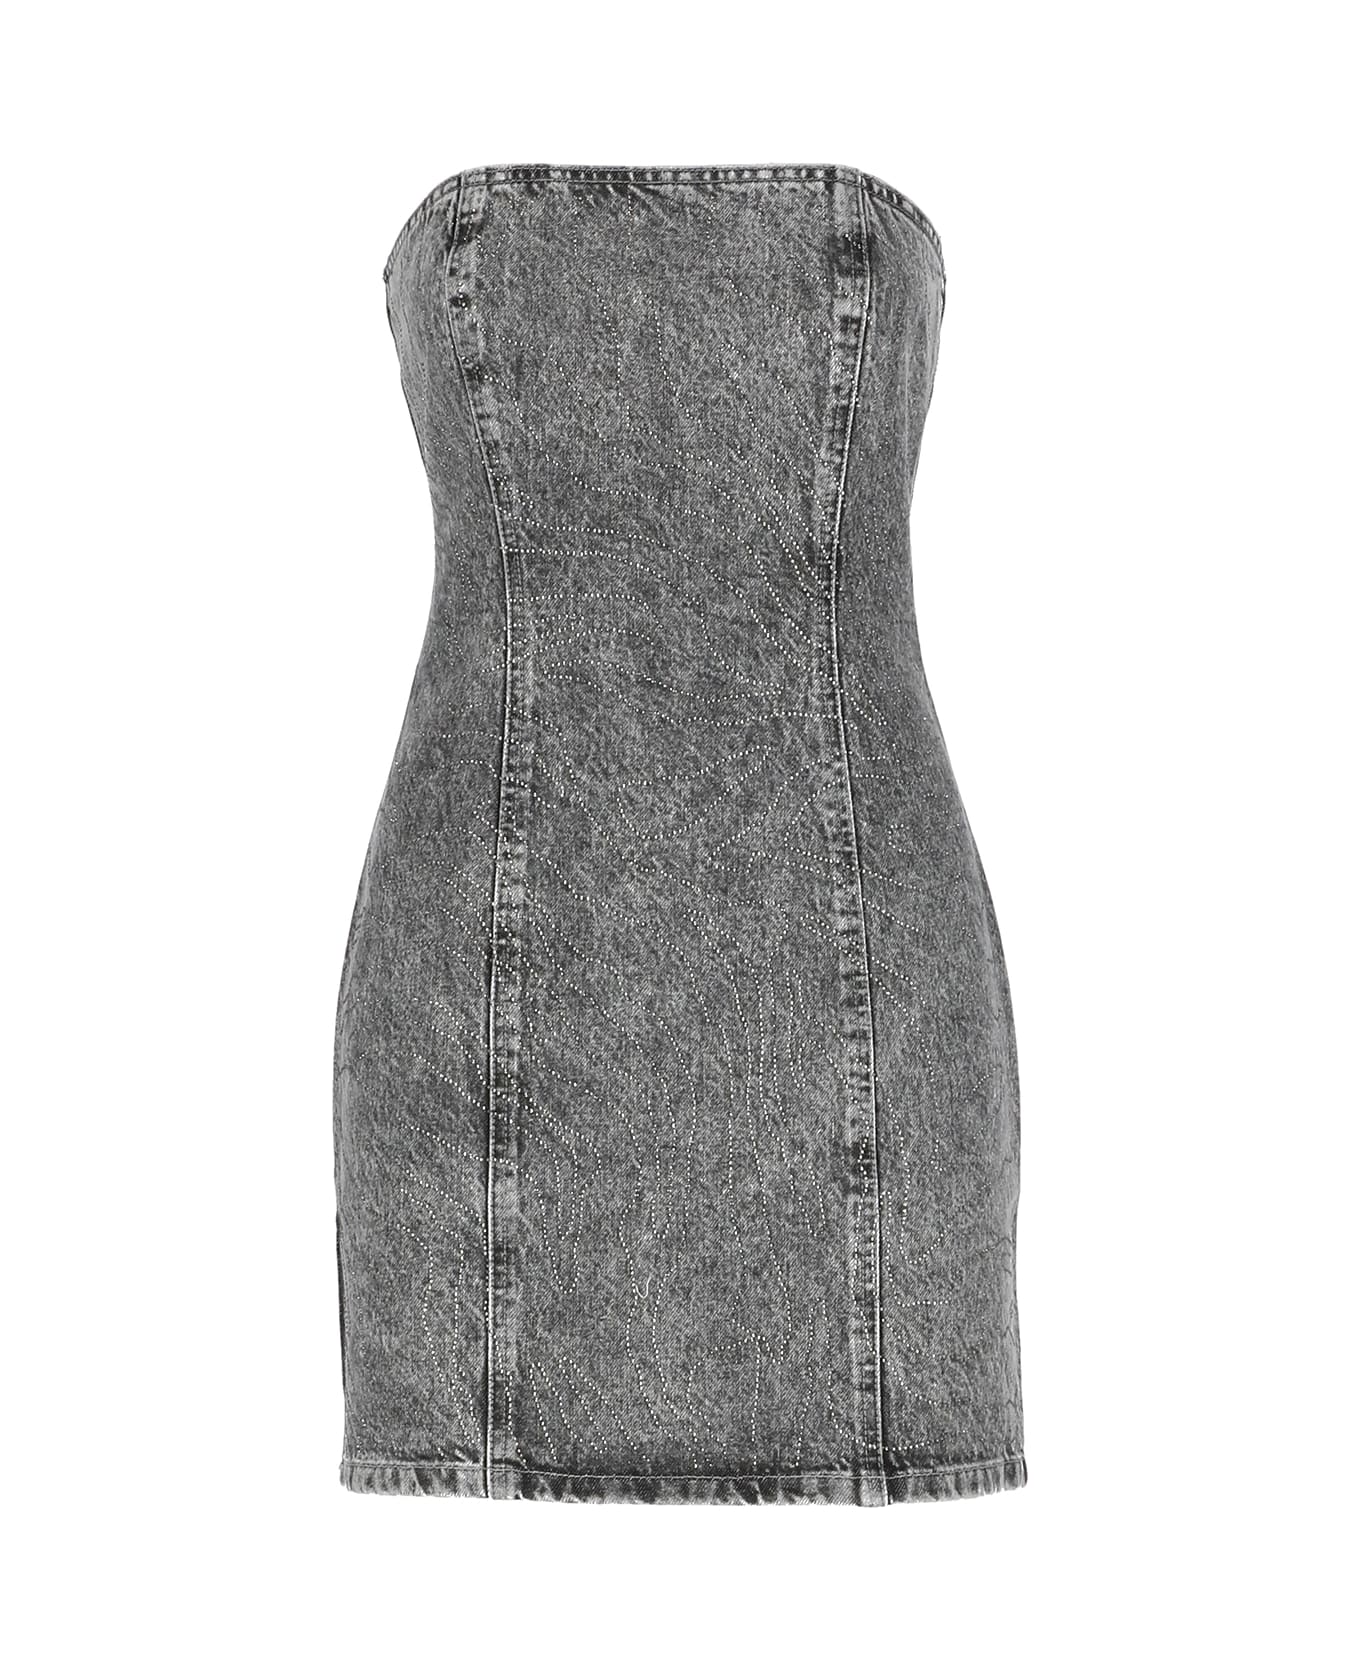 Rotate by Birger Christensen Dress With Rhinestones - Grey